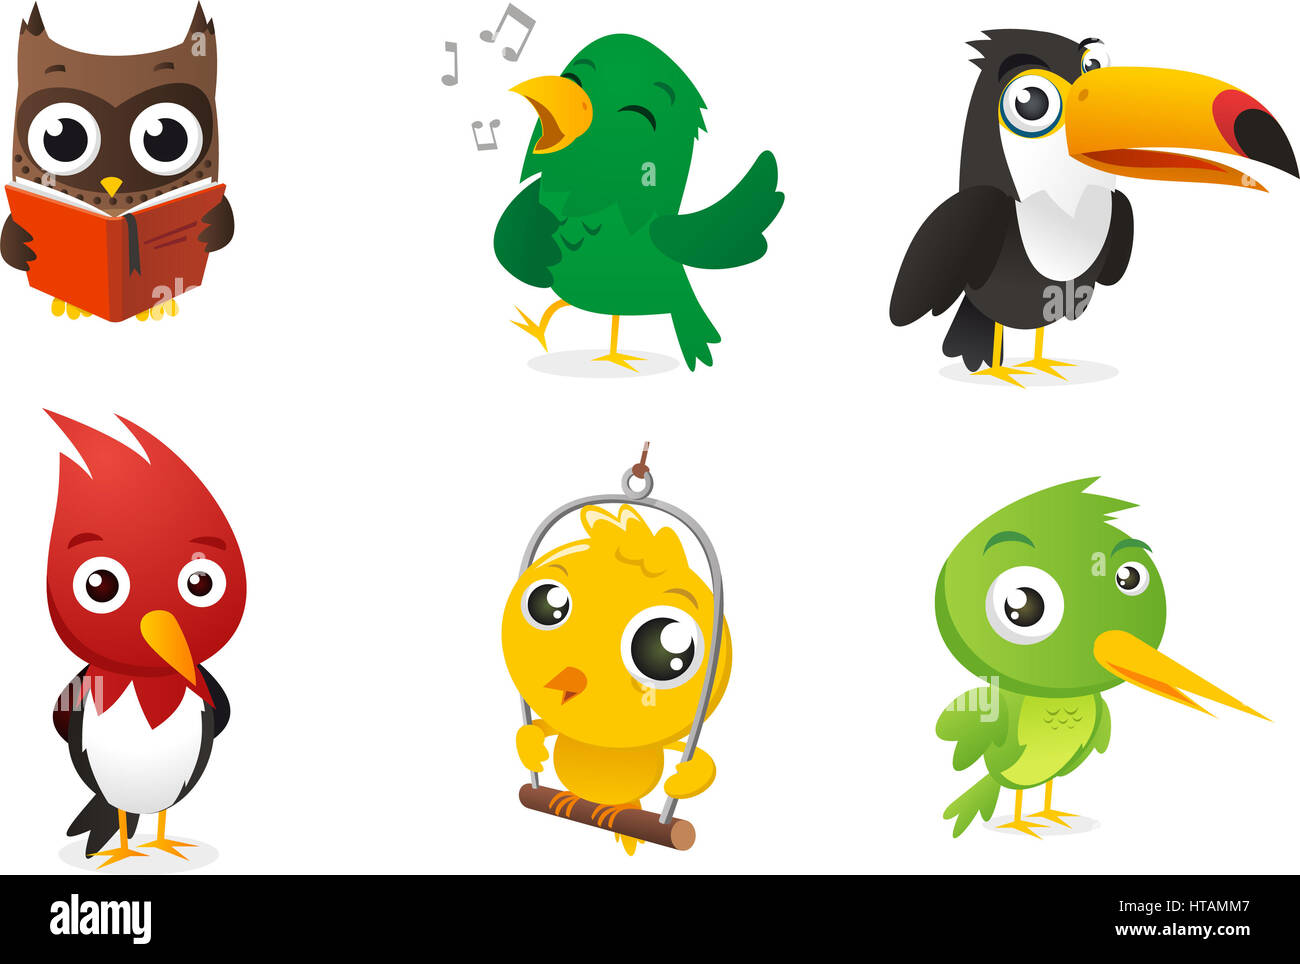 Sechs Cartoon Vollfarbe Vögel set mit Eule, Papagei, Tukan und Specht Vektor-Illustration. Stockfoto